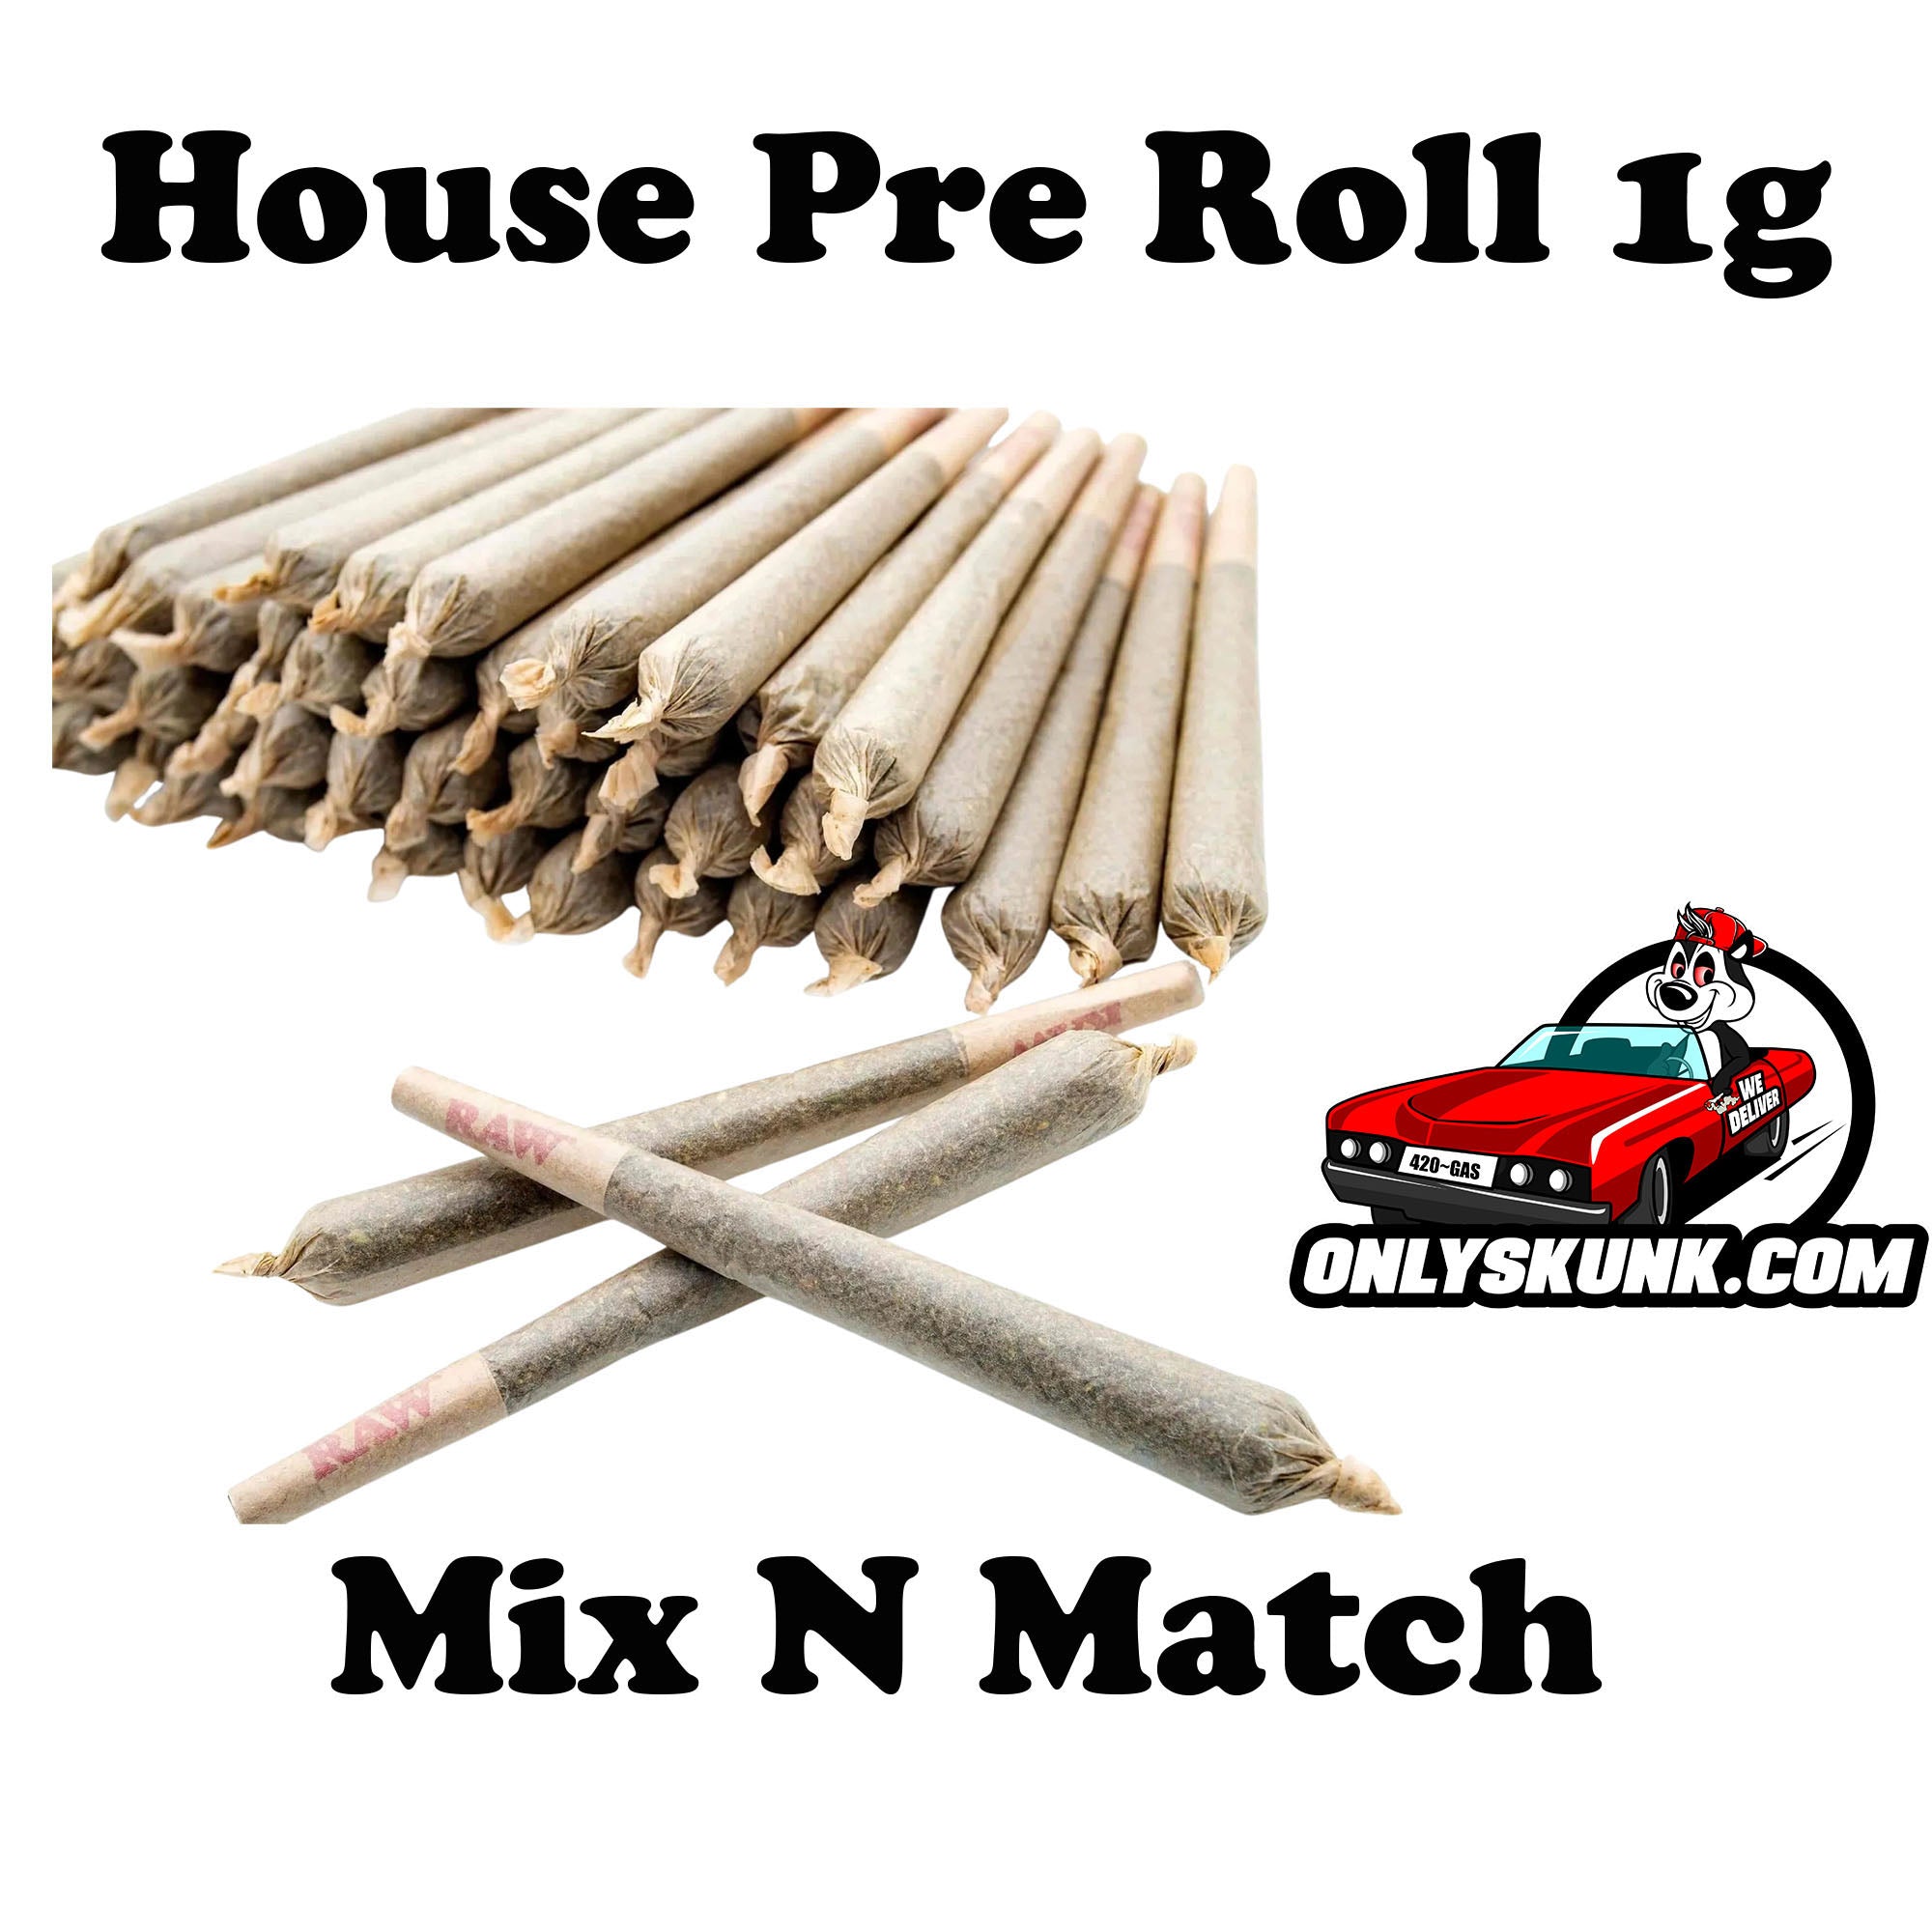 House Pre Roll 1g Mix N Match